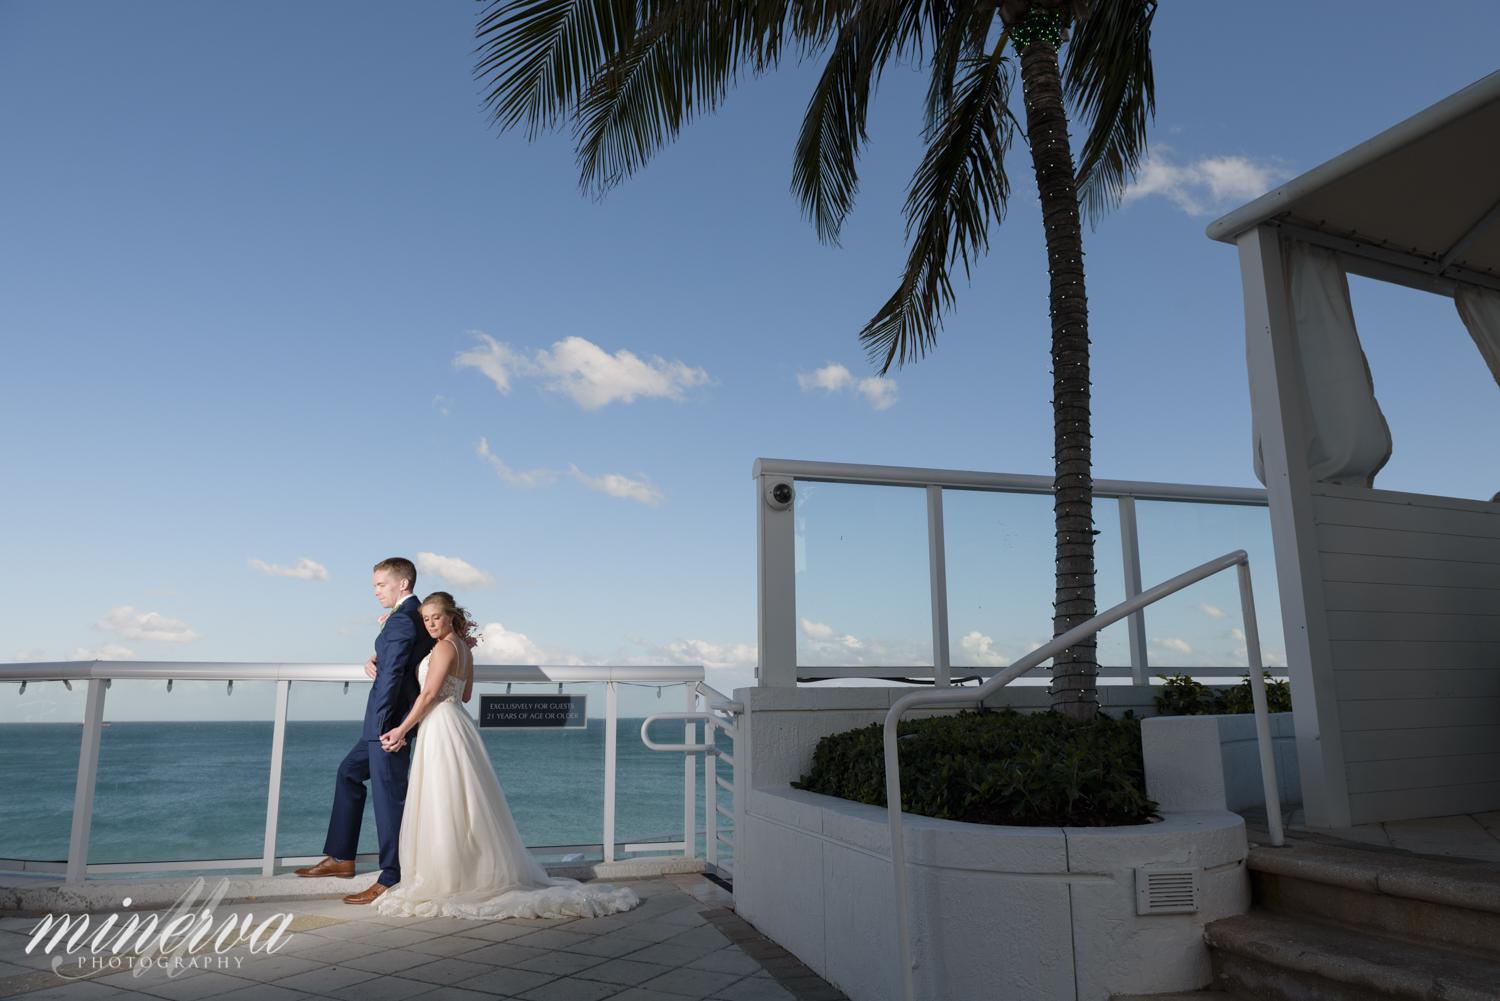 046_romantic-sunset-beach-wedding-photography_hilton-fort-lauderdale-beach-resort_south-florida_miami_broward_palm-beach_keys_orlando_photographer